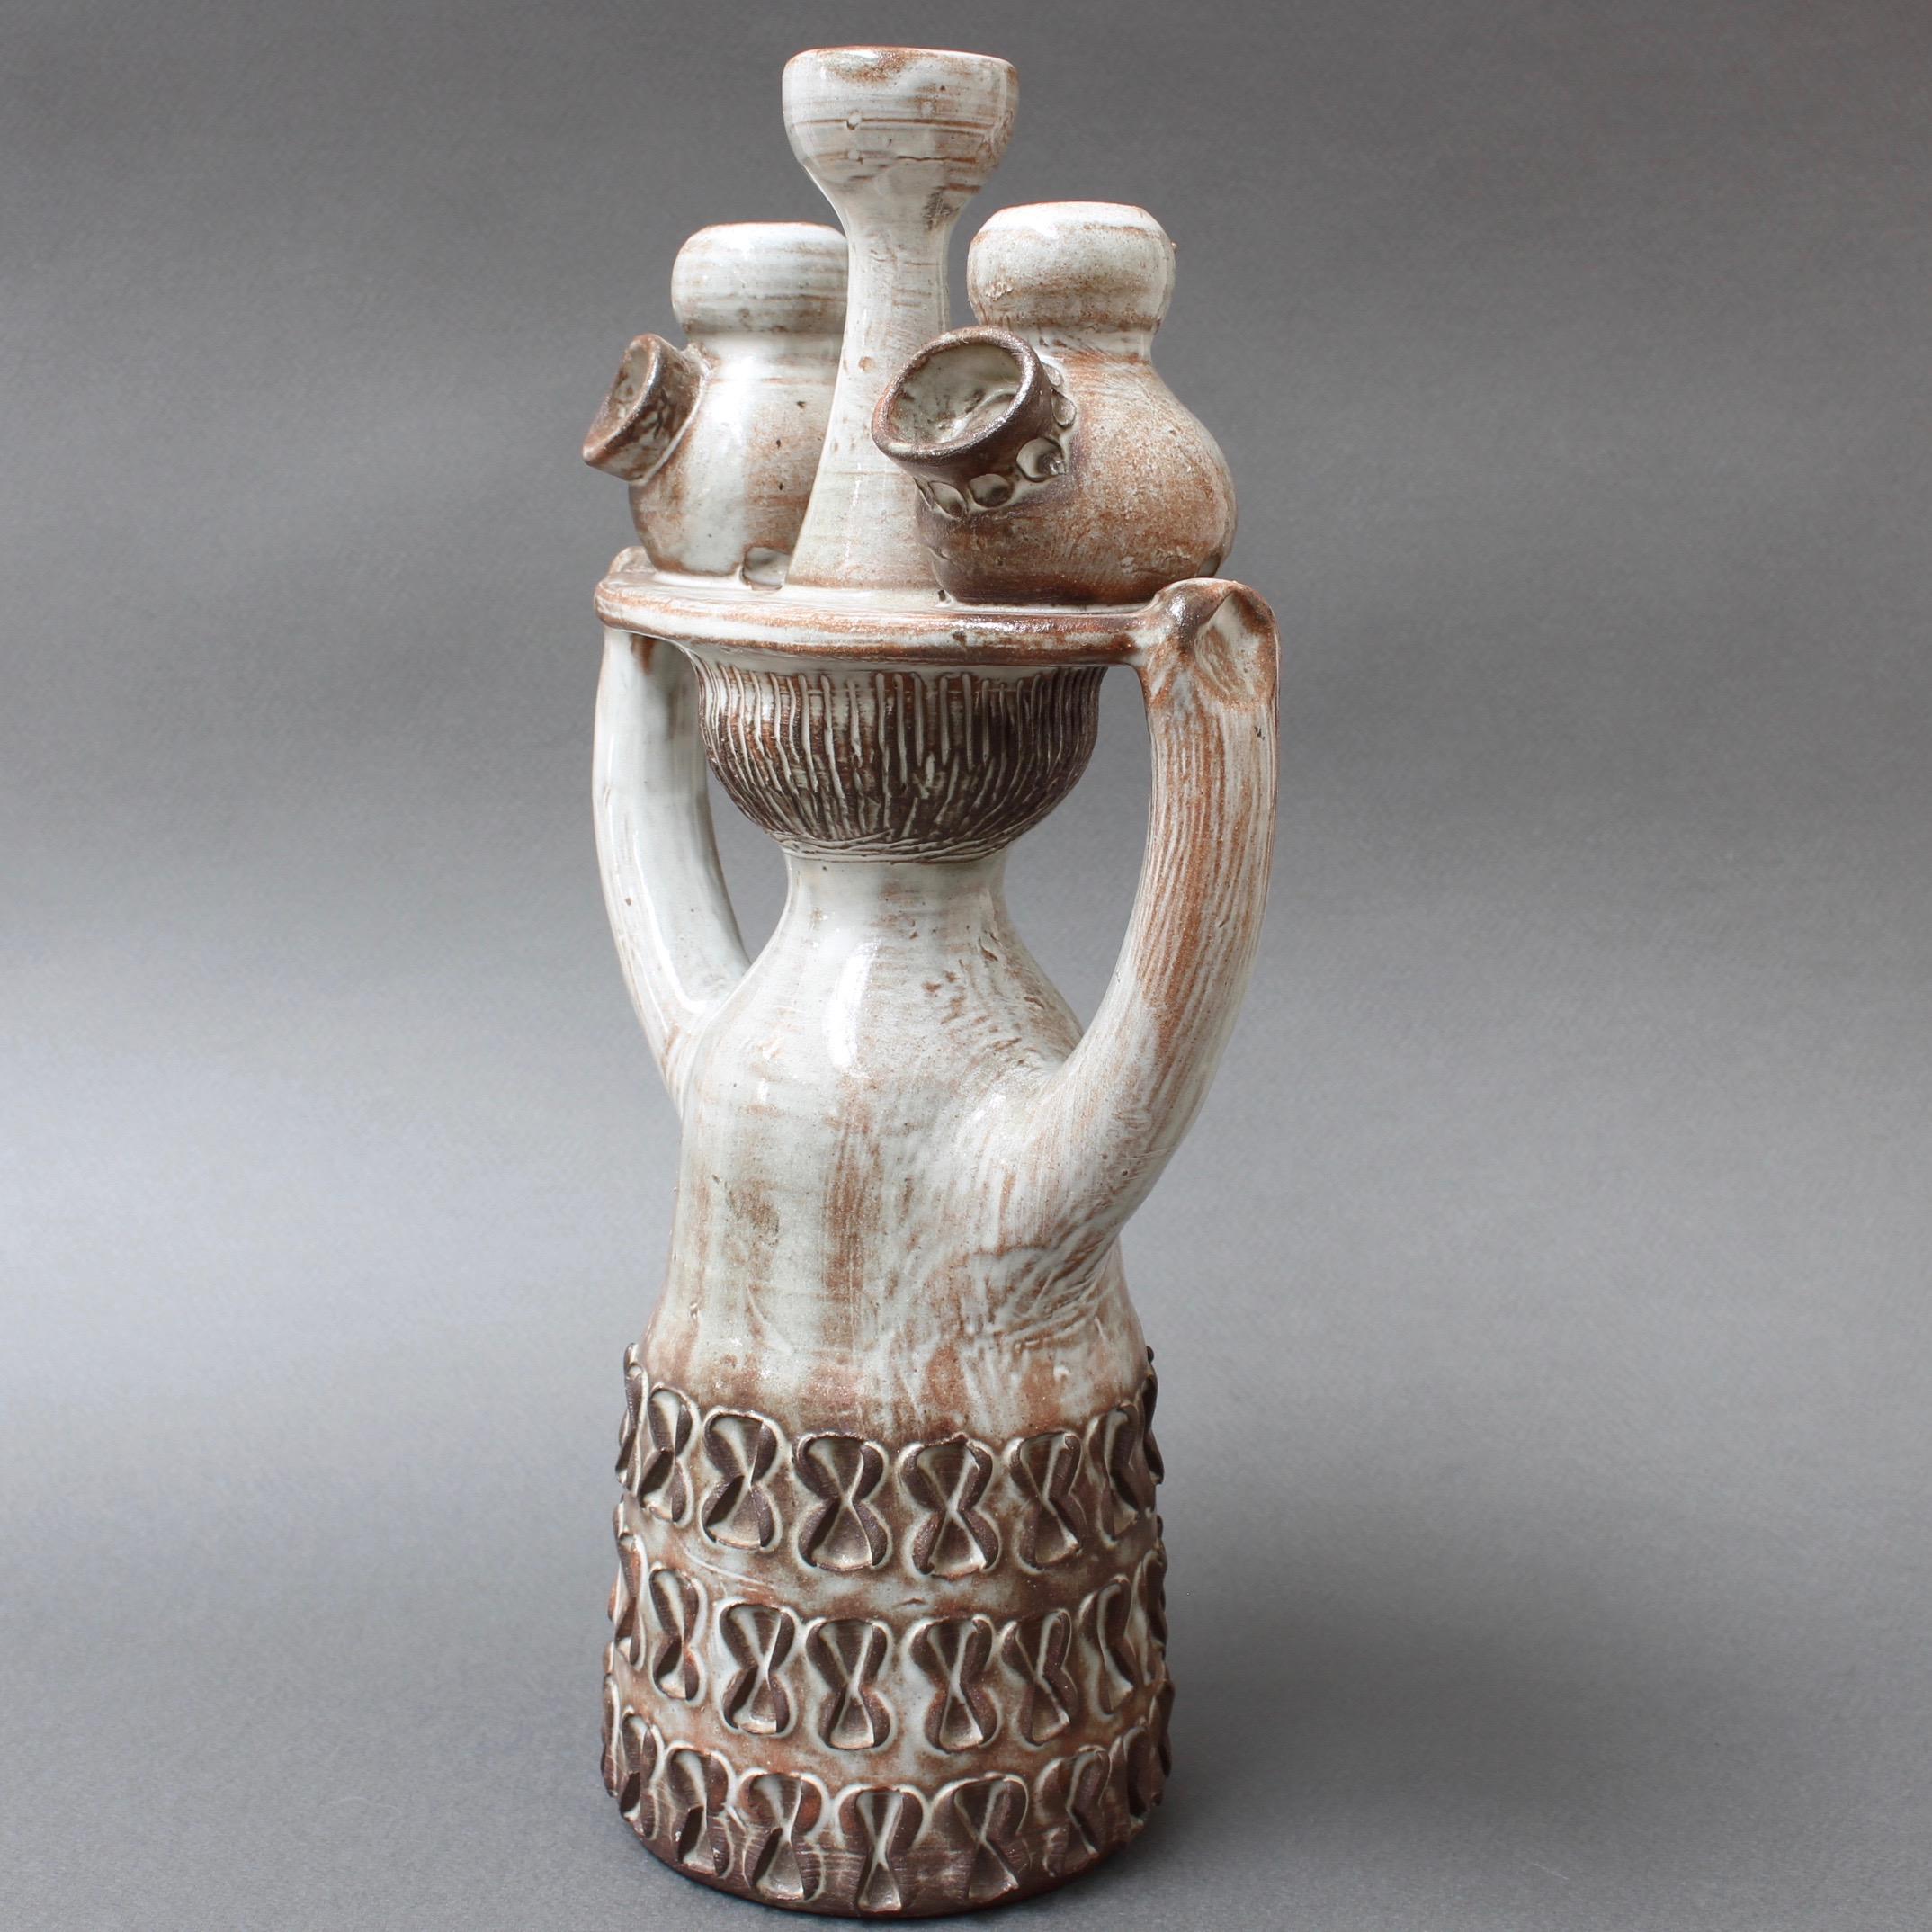 Glazed Ceramic Pottery Carrier by Jacques Pouchain / Atelier Dieulefit 1